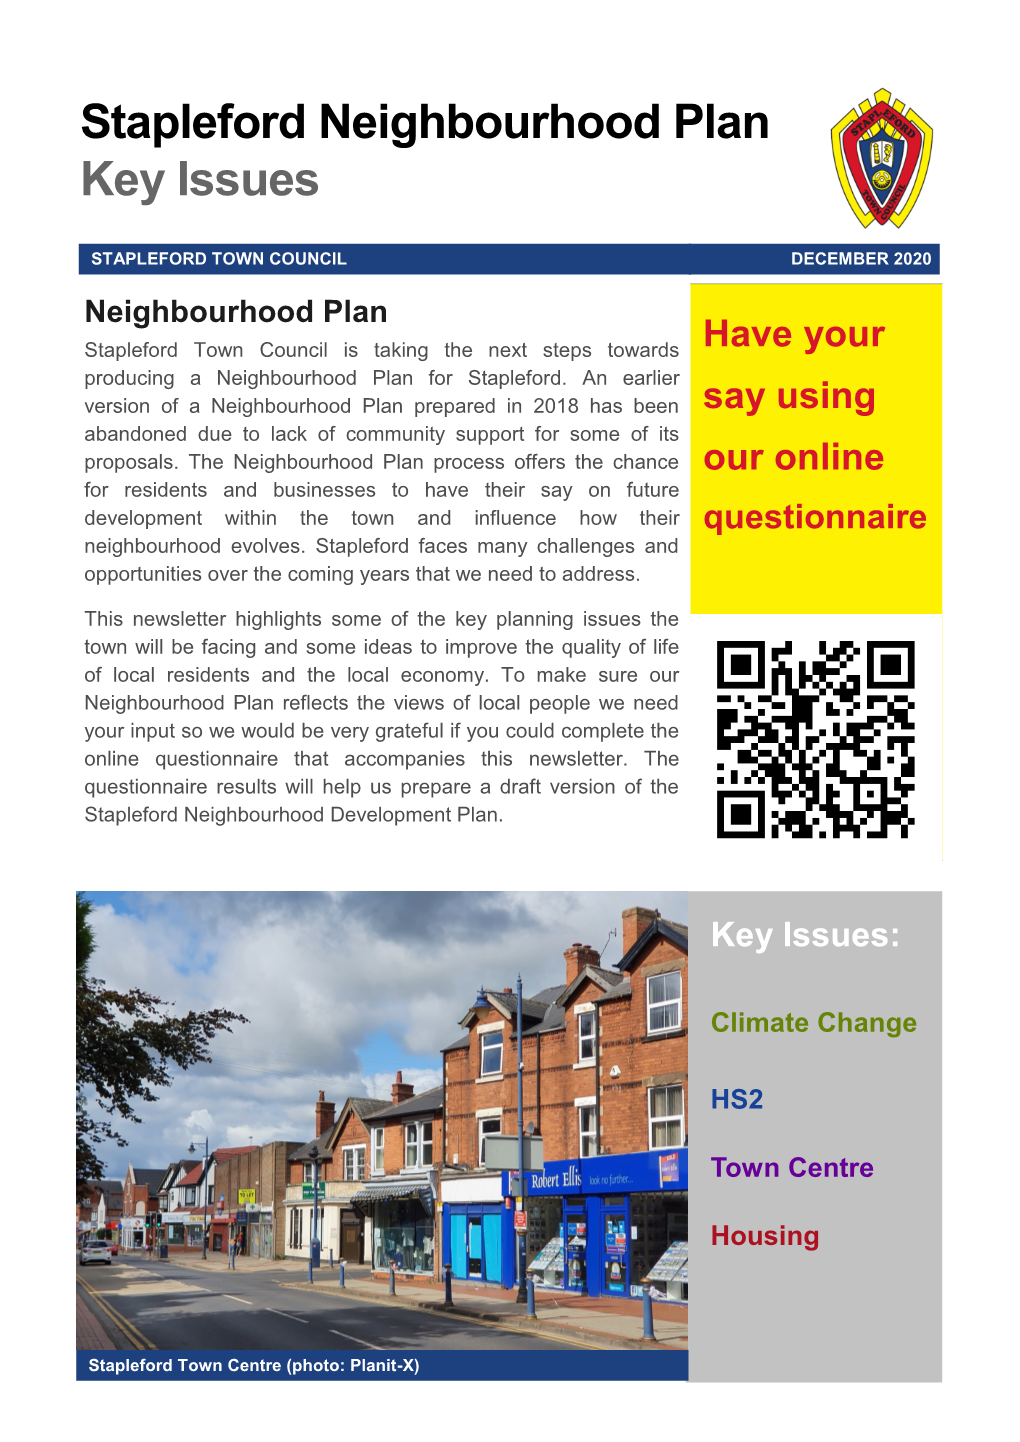 Stapleford Neighbourhood Plan Key Issues